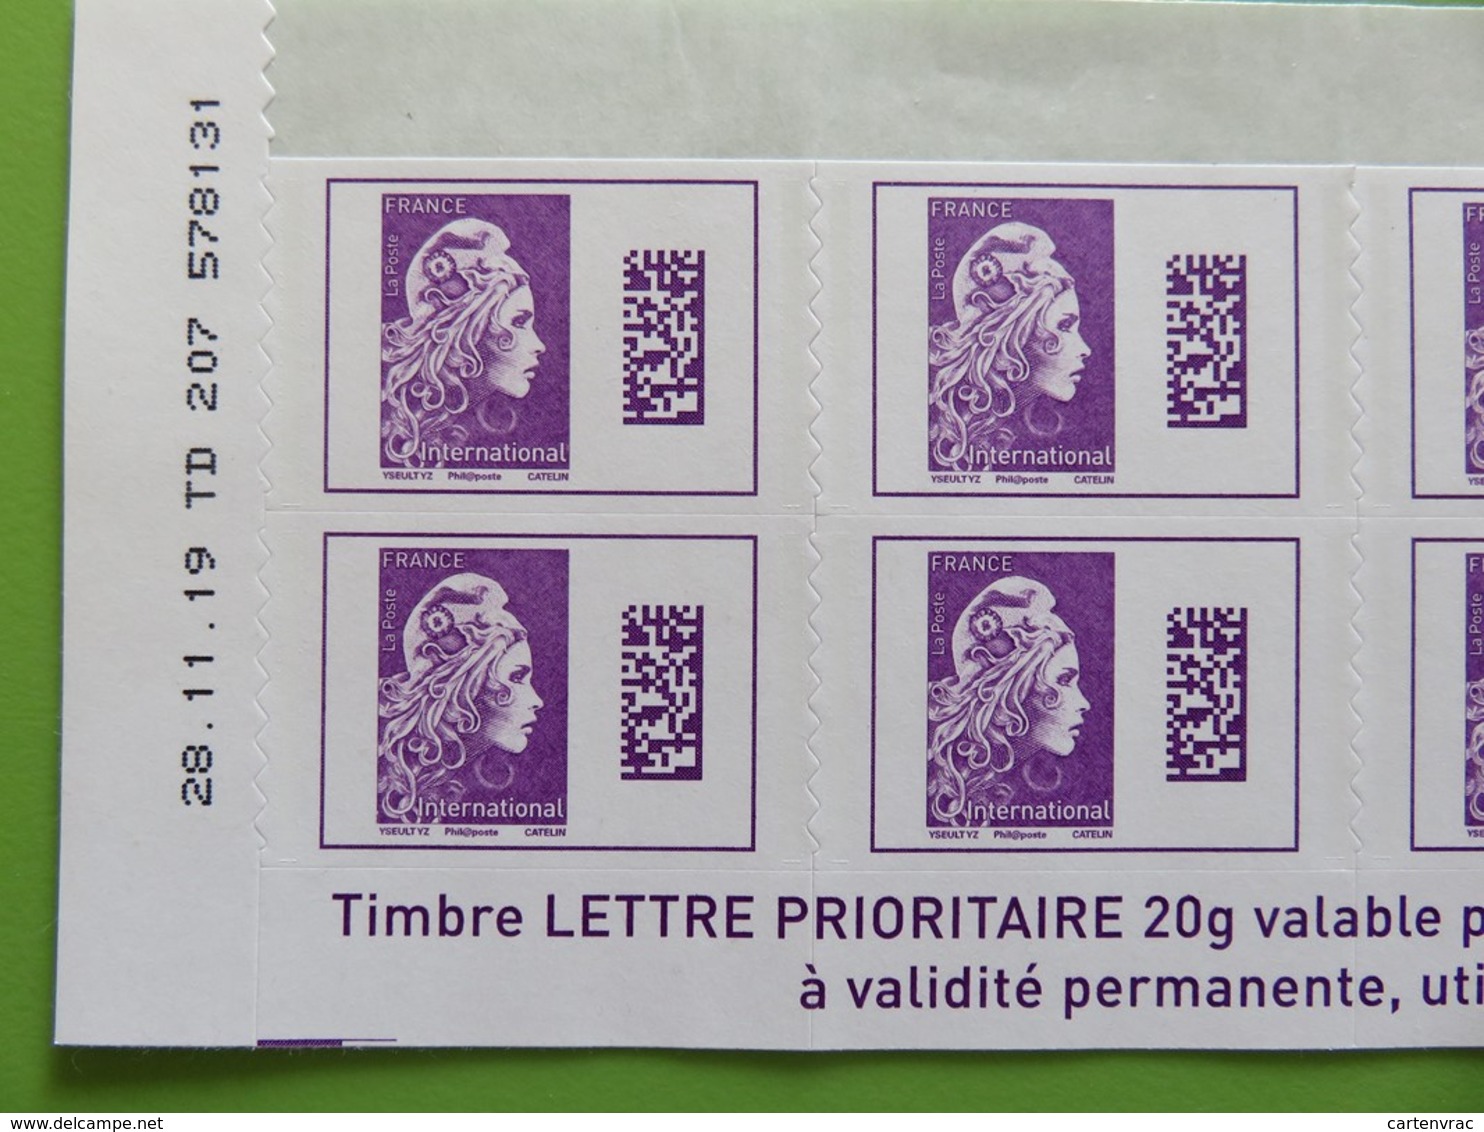 Timbre France YT 1656 AA - Coin Daté - Marianne D'Yseult Digan - L'engagée - Lettre Internationale - Neuf - 2019 - 2010-2019